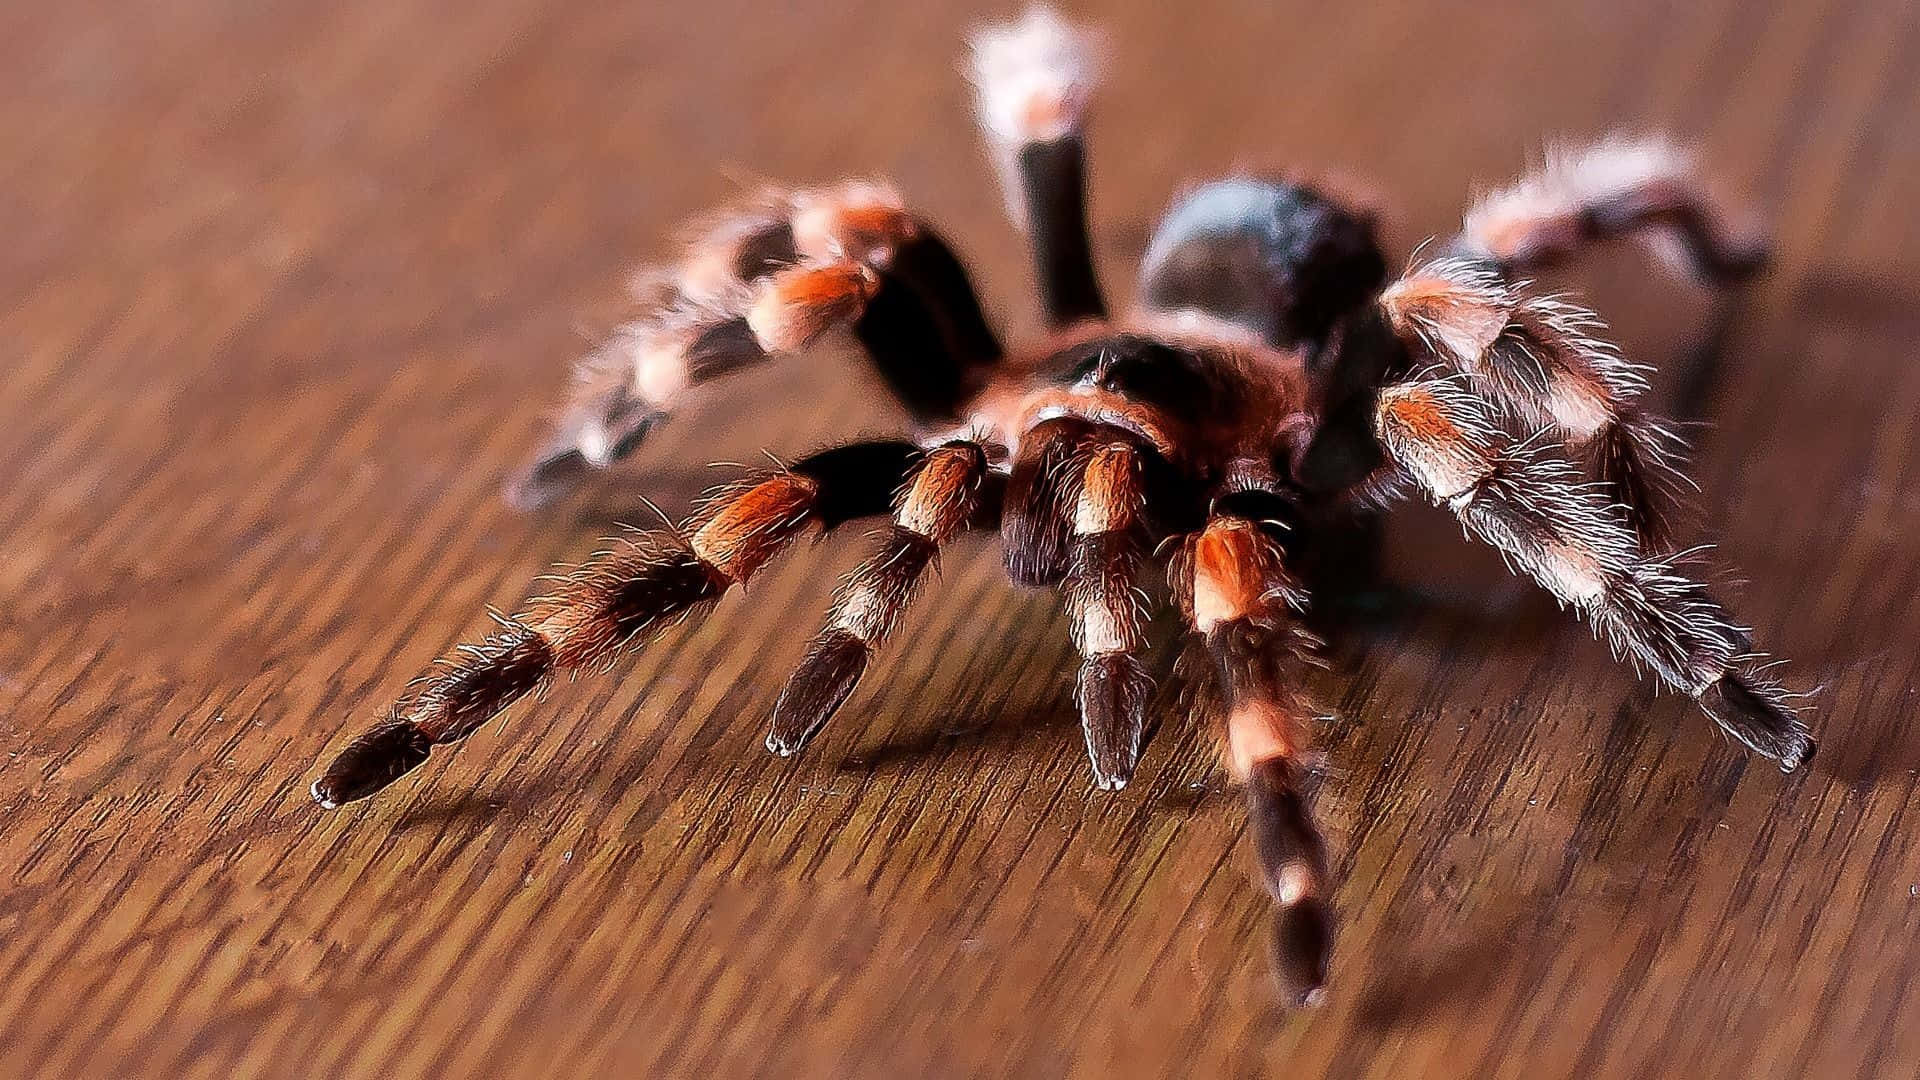 A Spooky Spider Web Illuminated In The Dark